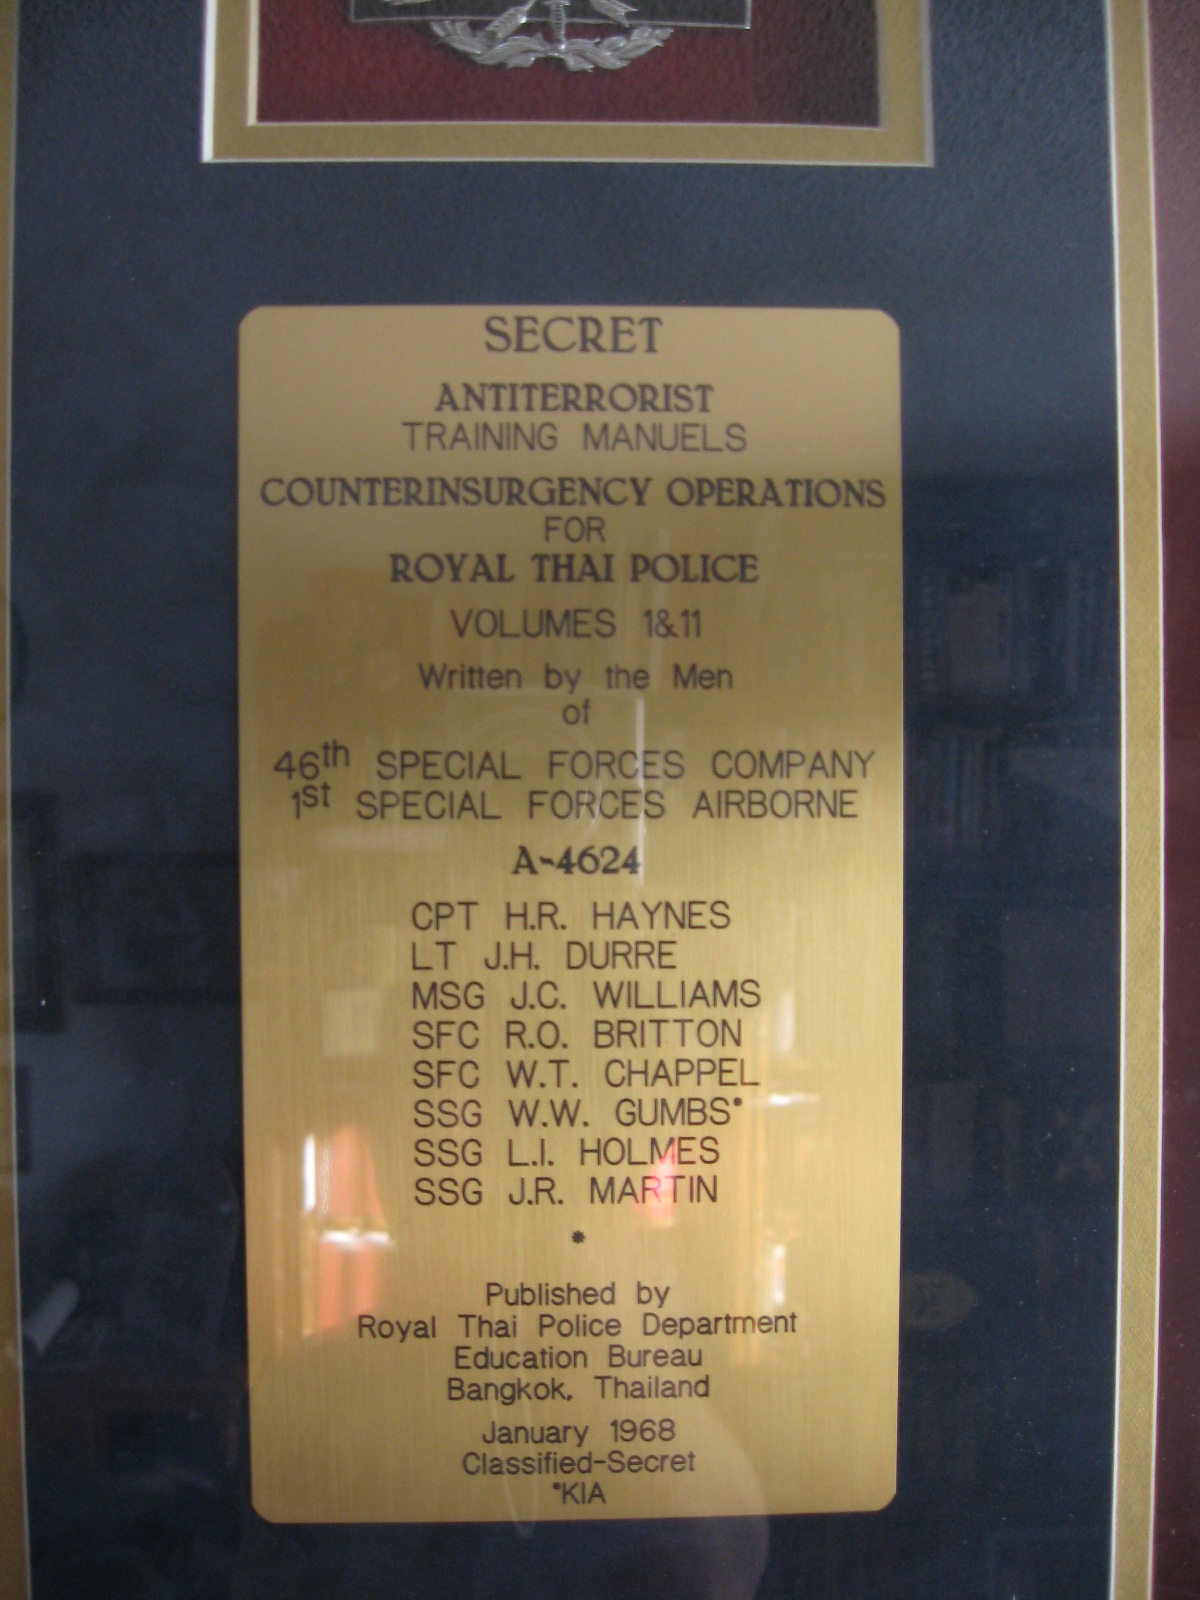 Royal Thai Police Counterinsurgency Books, A-Team 4624